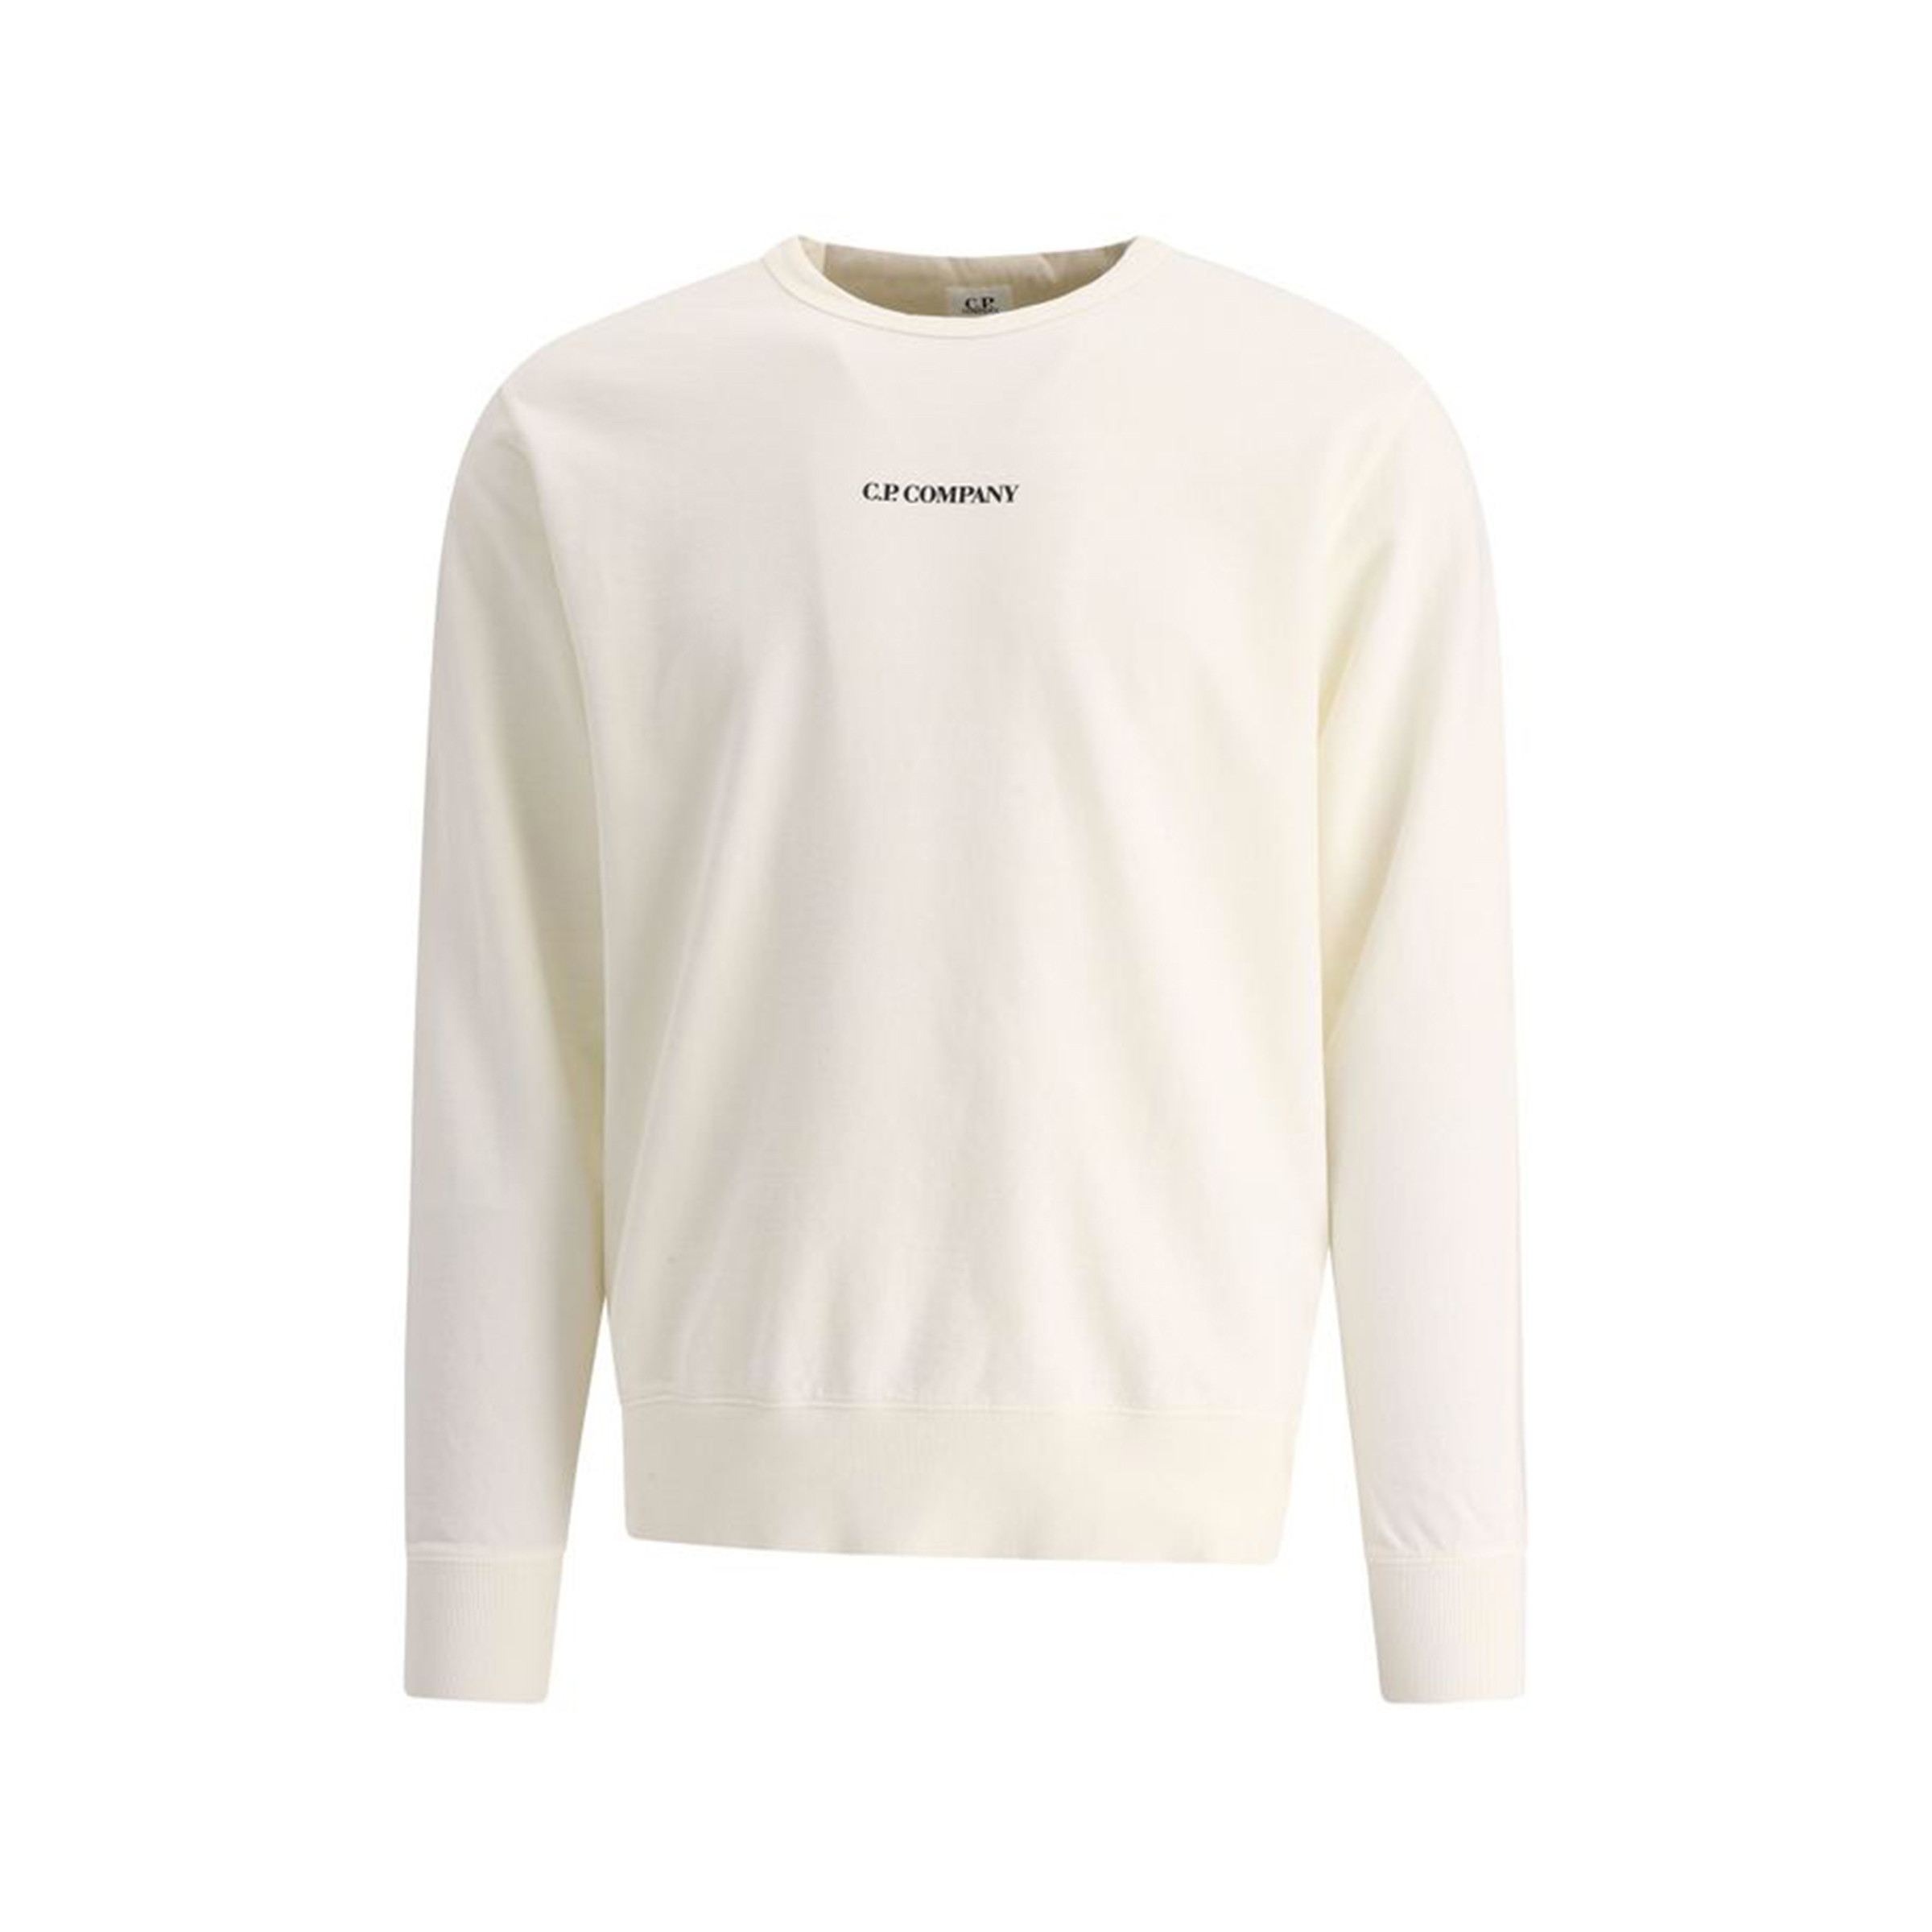 c.p. company sweatshirt man light fleece small logo 12cmss187a-002246g